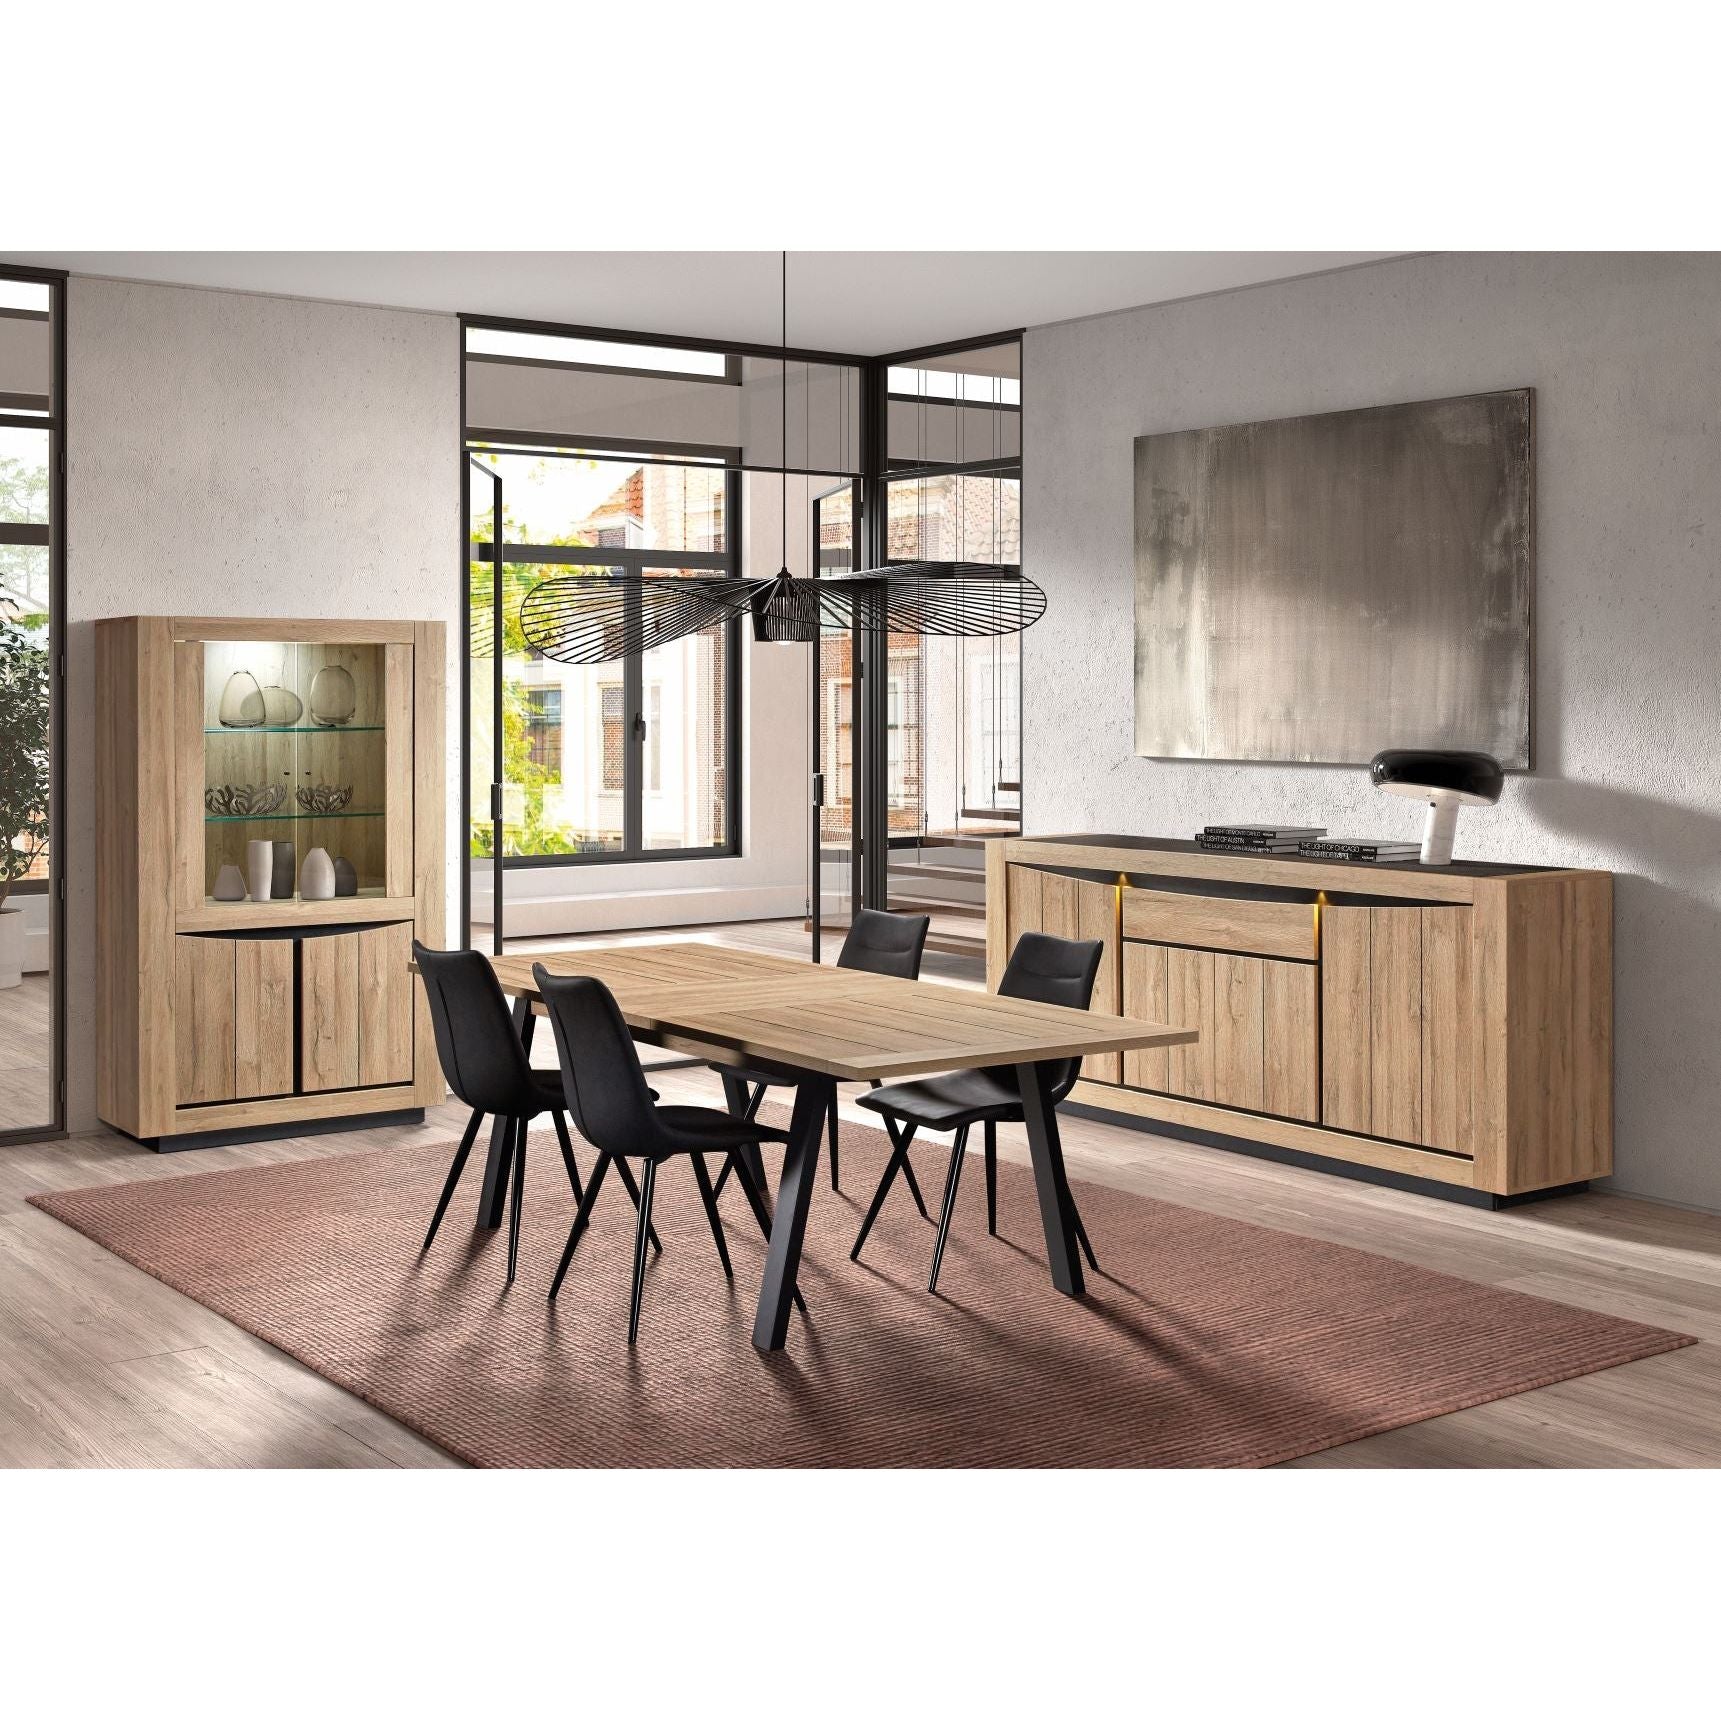 Dresser | Furniture series Fugue | Natural, gray, brown | 240x